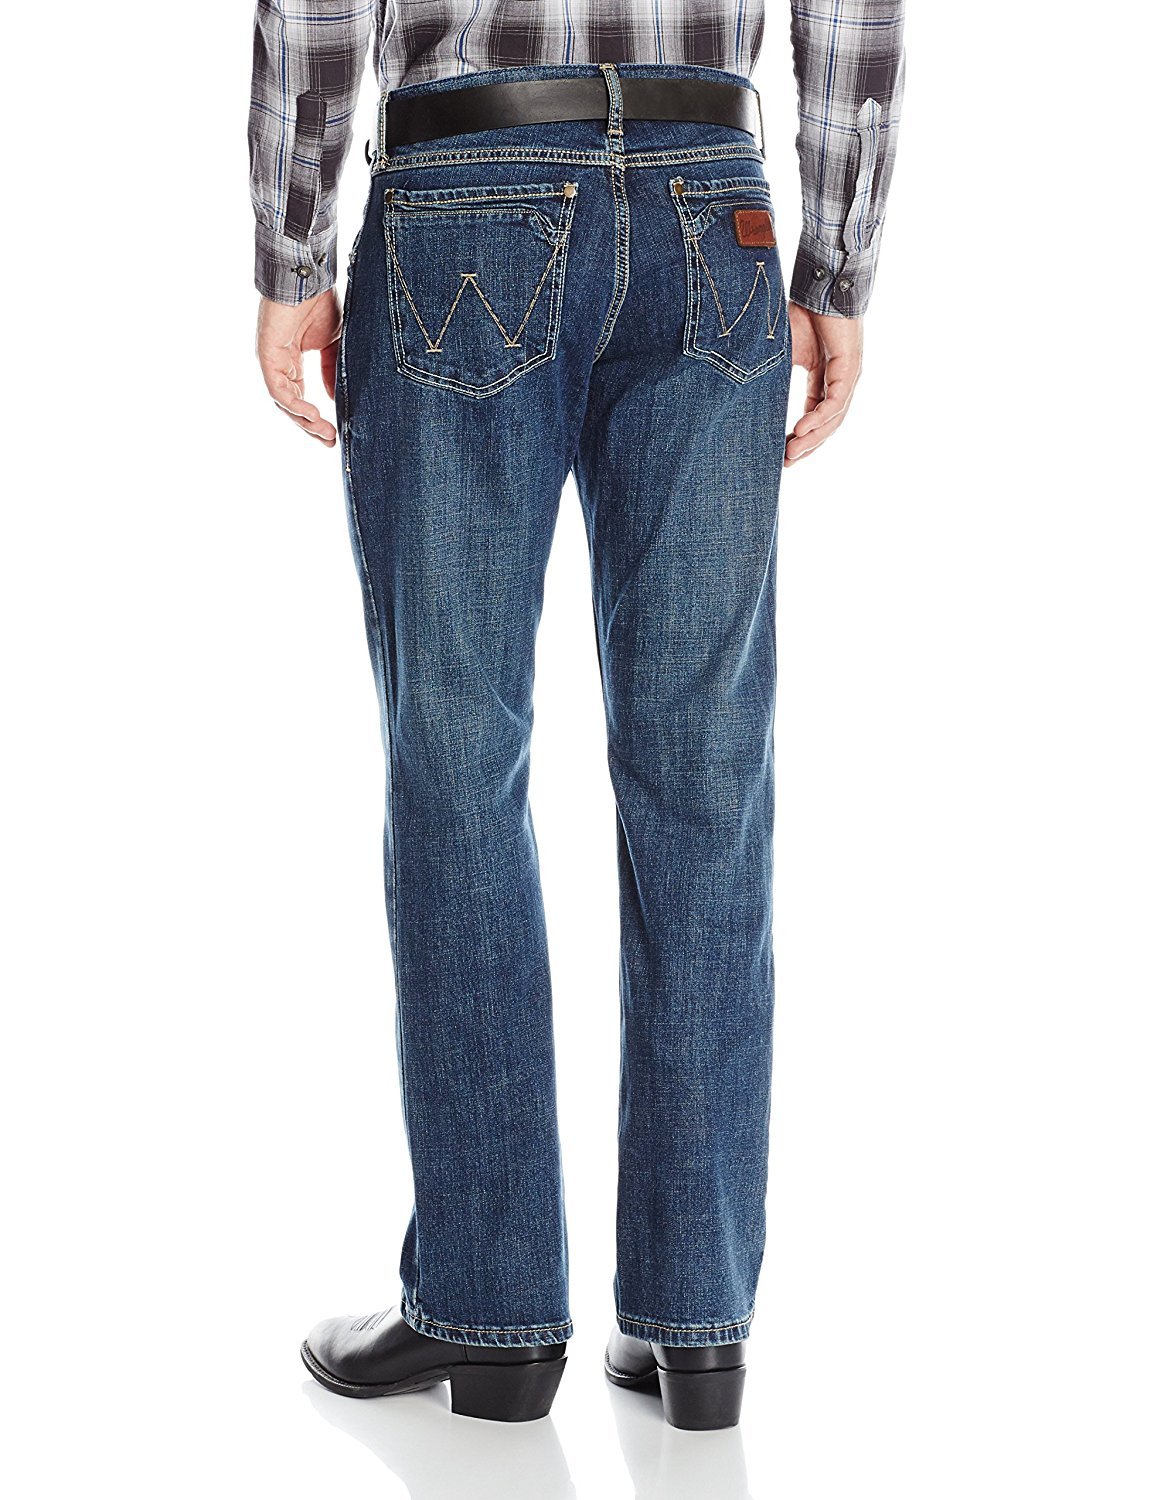 Wrangler Men's Retro Slim Fit Boot Cut Jean, Layton, 35x32 